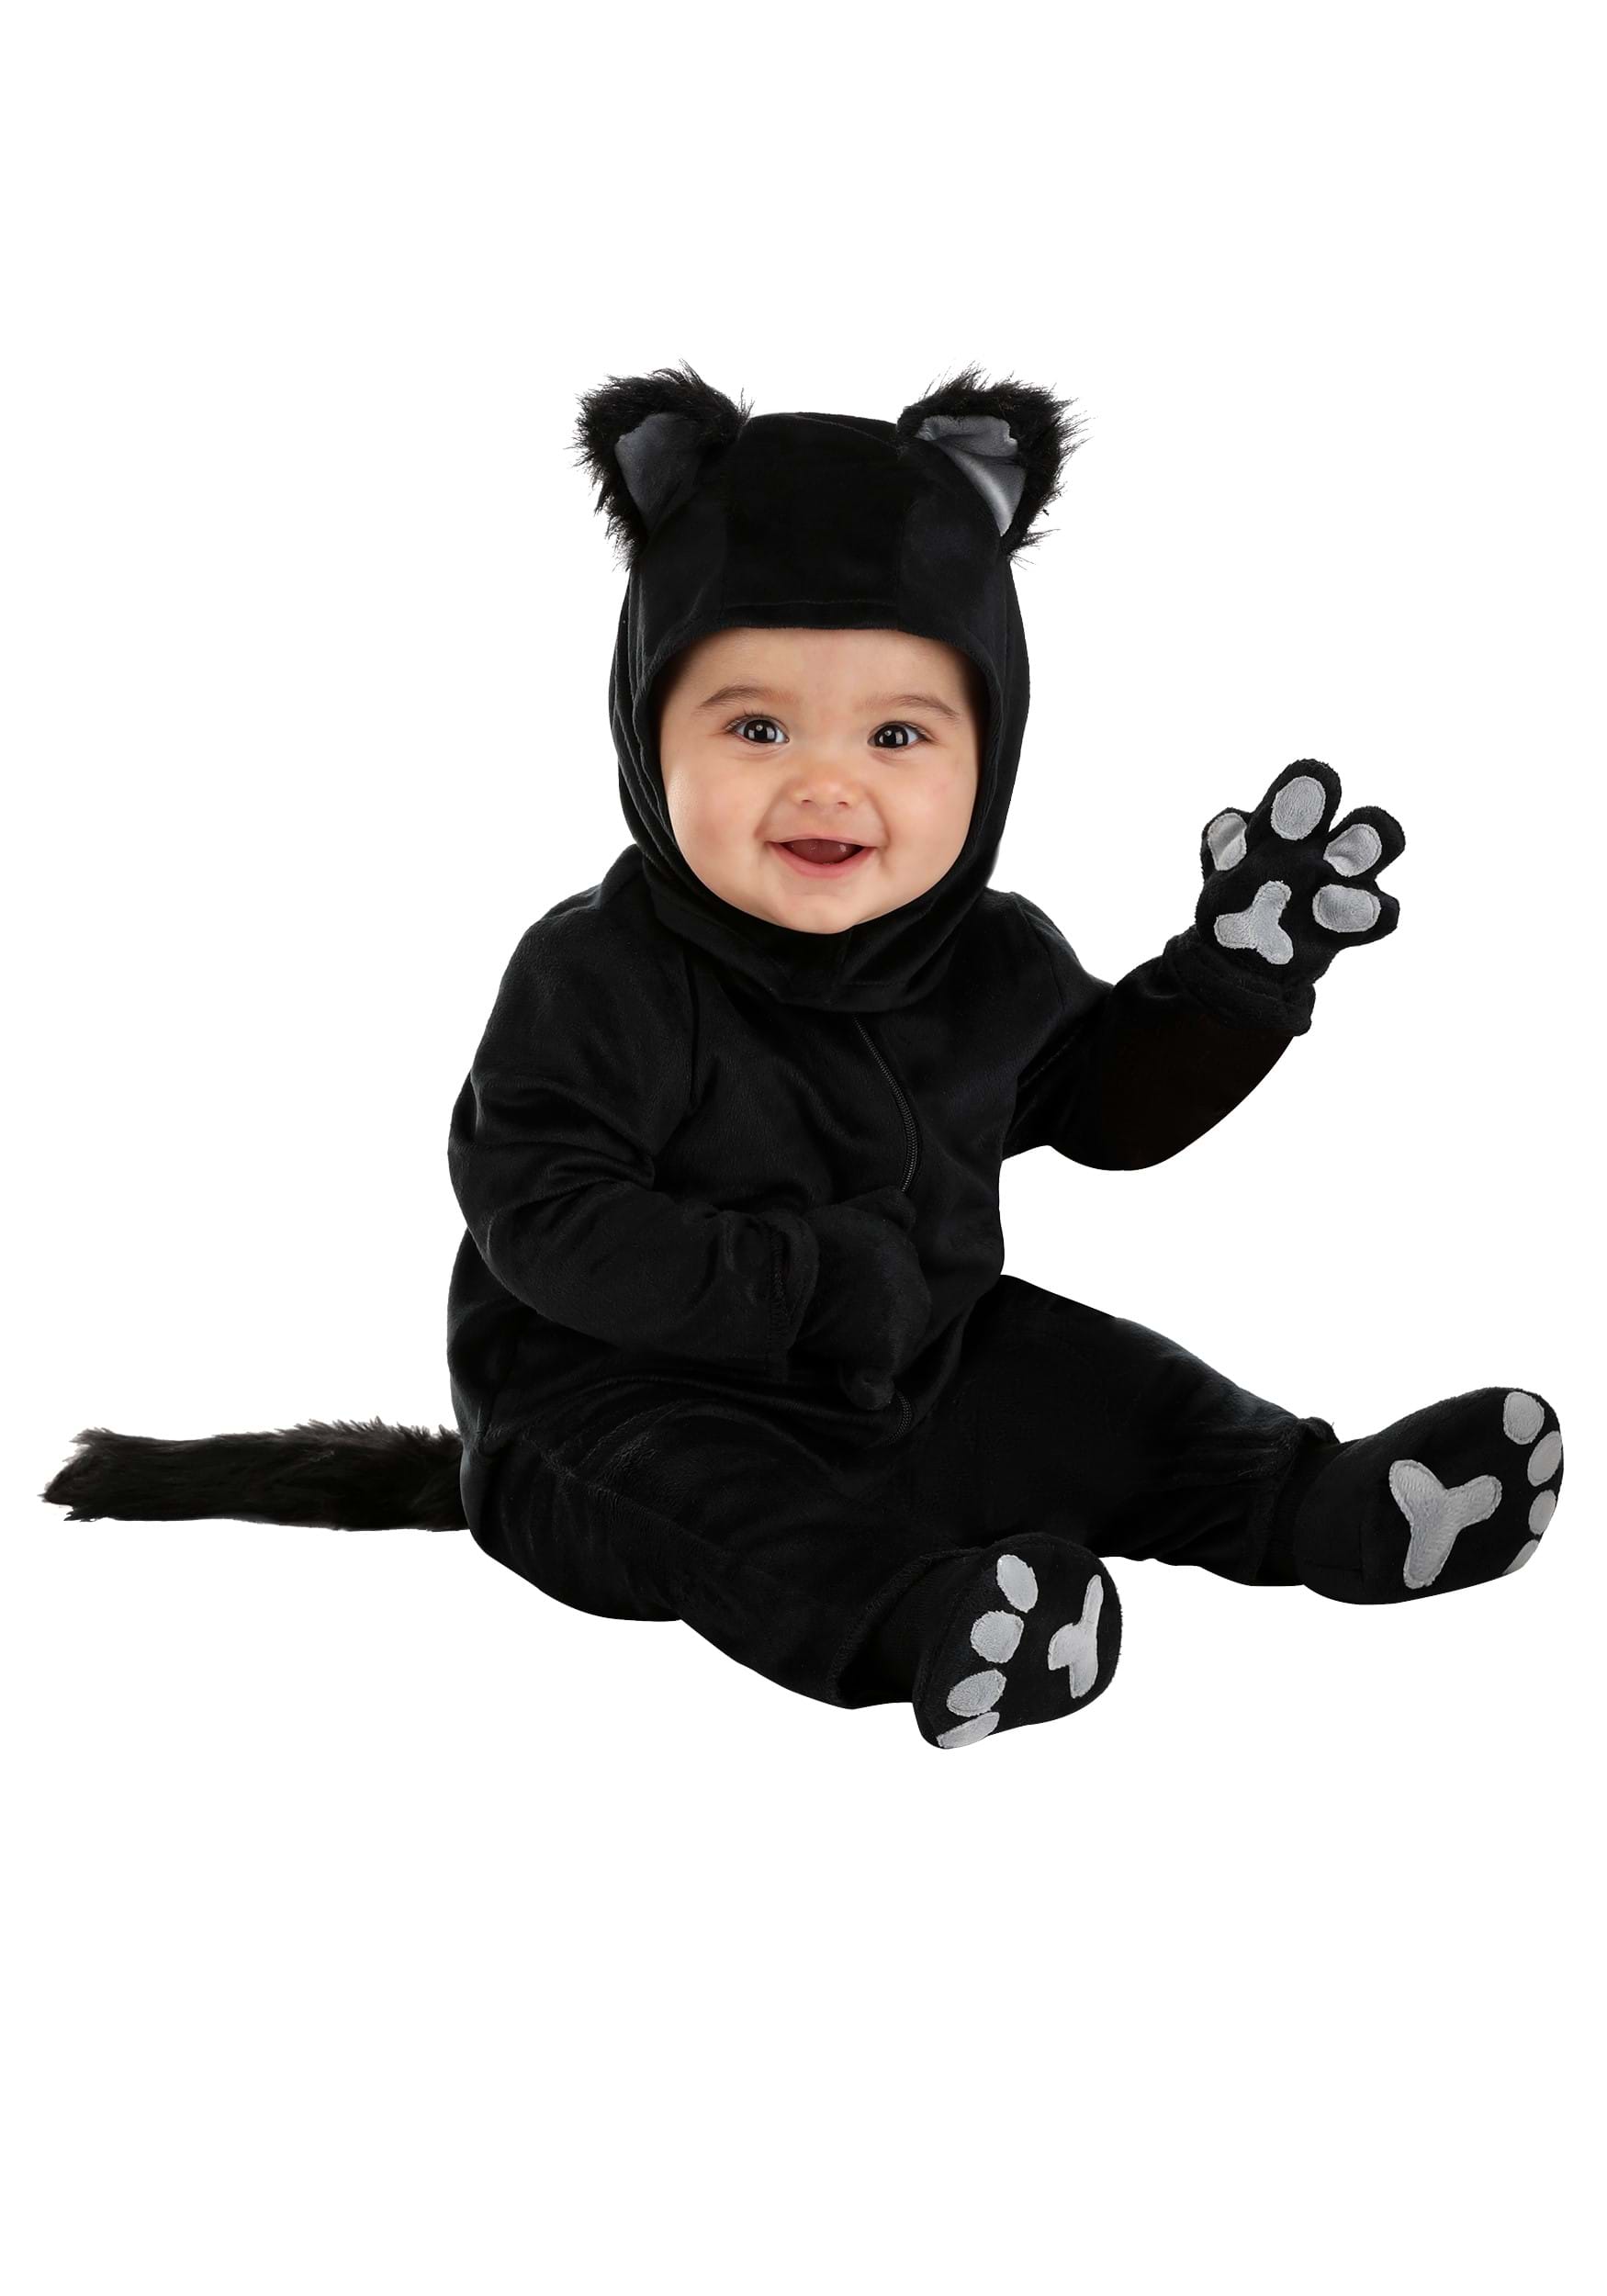 ferry Portrayal Hilarious Infant Black Cat Costume